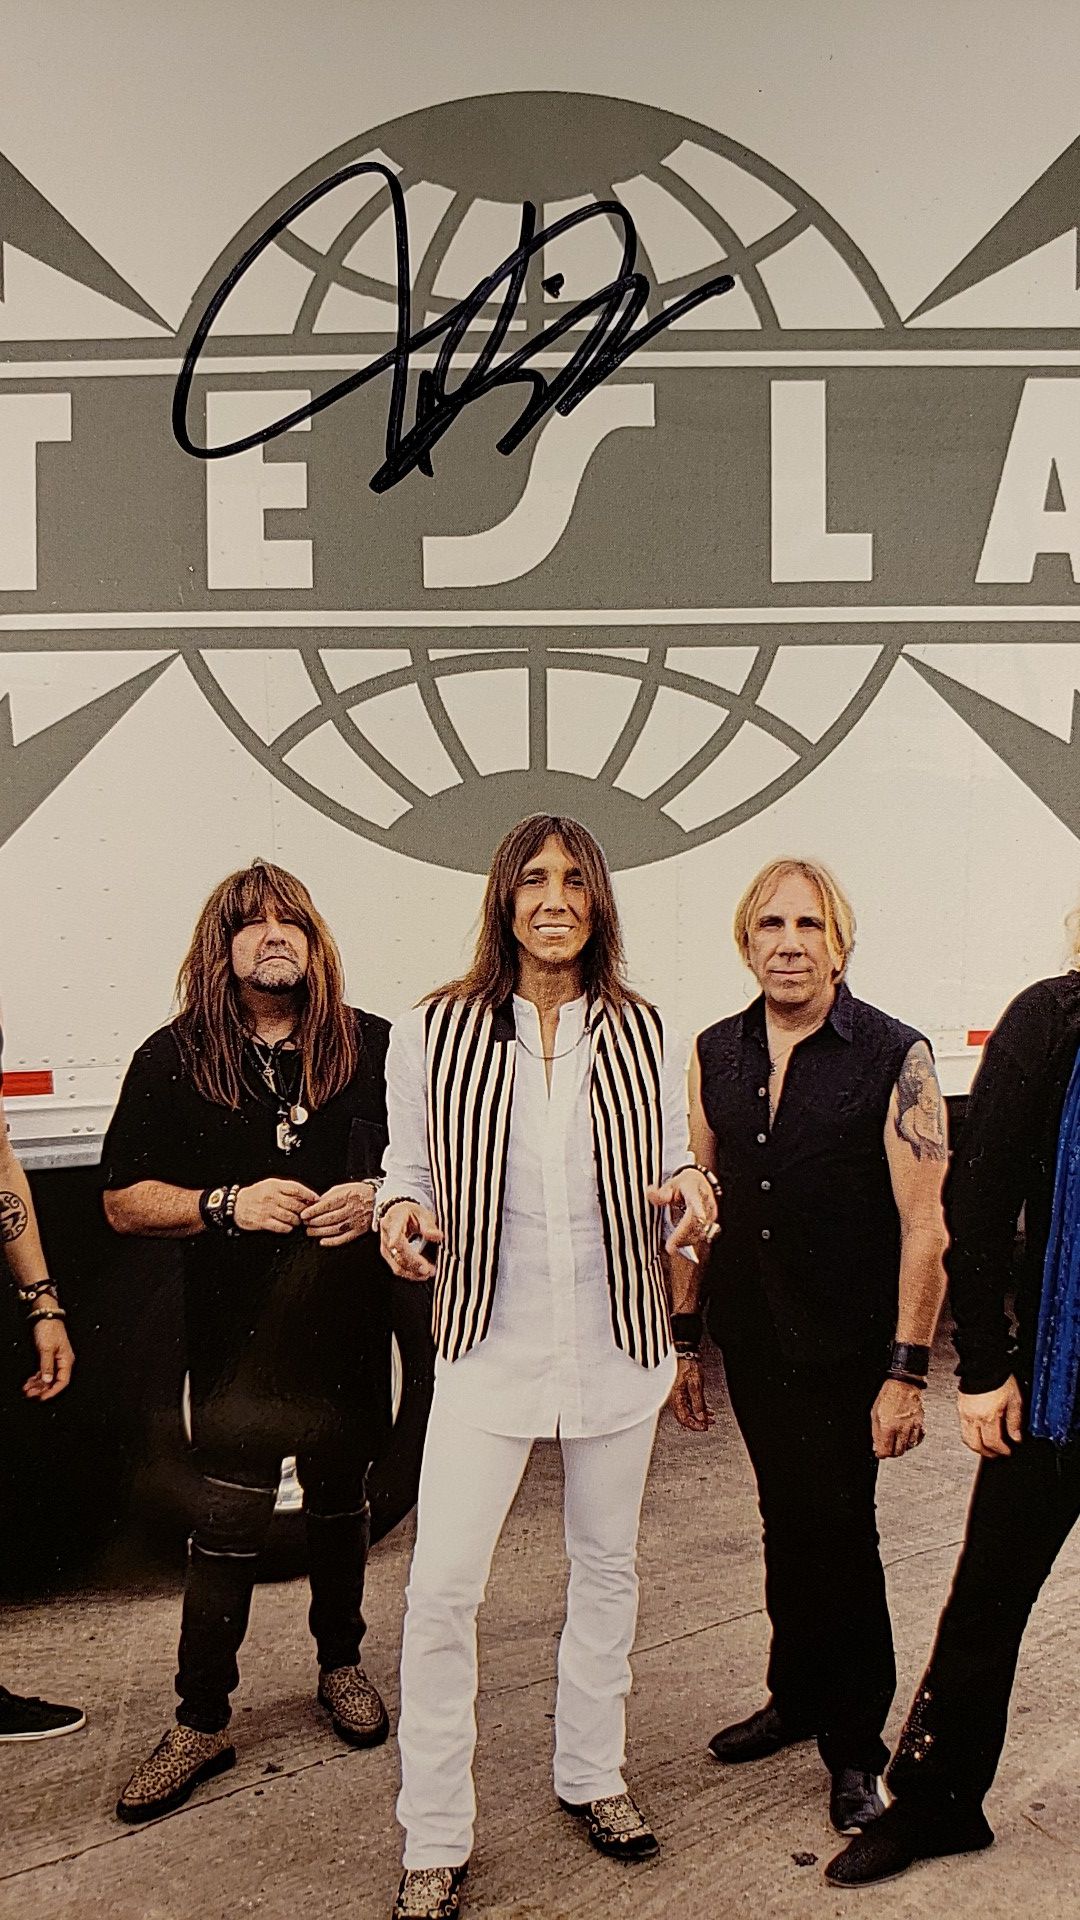 TESLA Band Group Photo Signed at Live Show Concert, MINT!